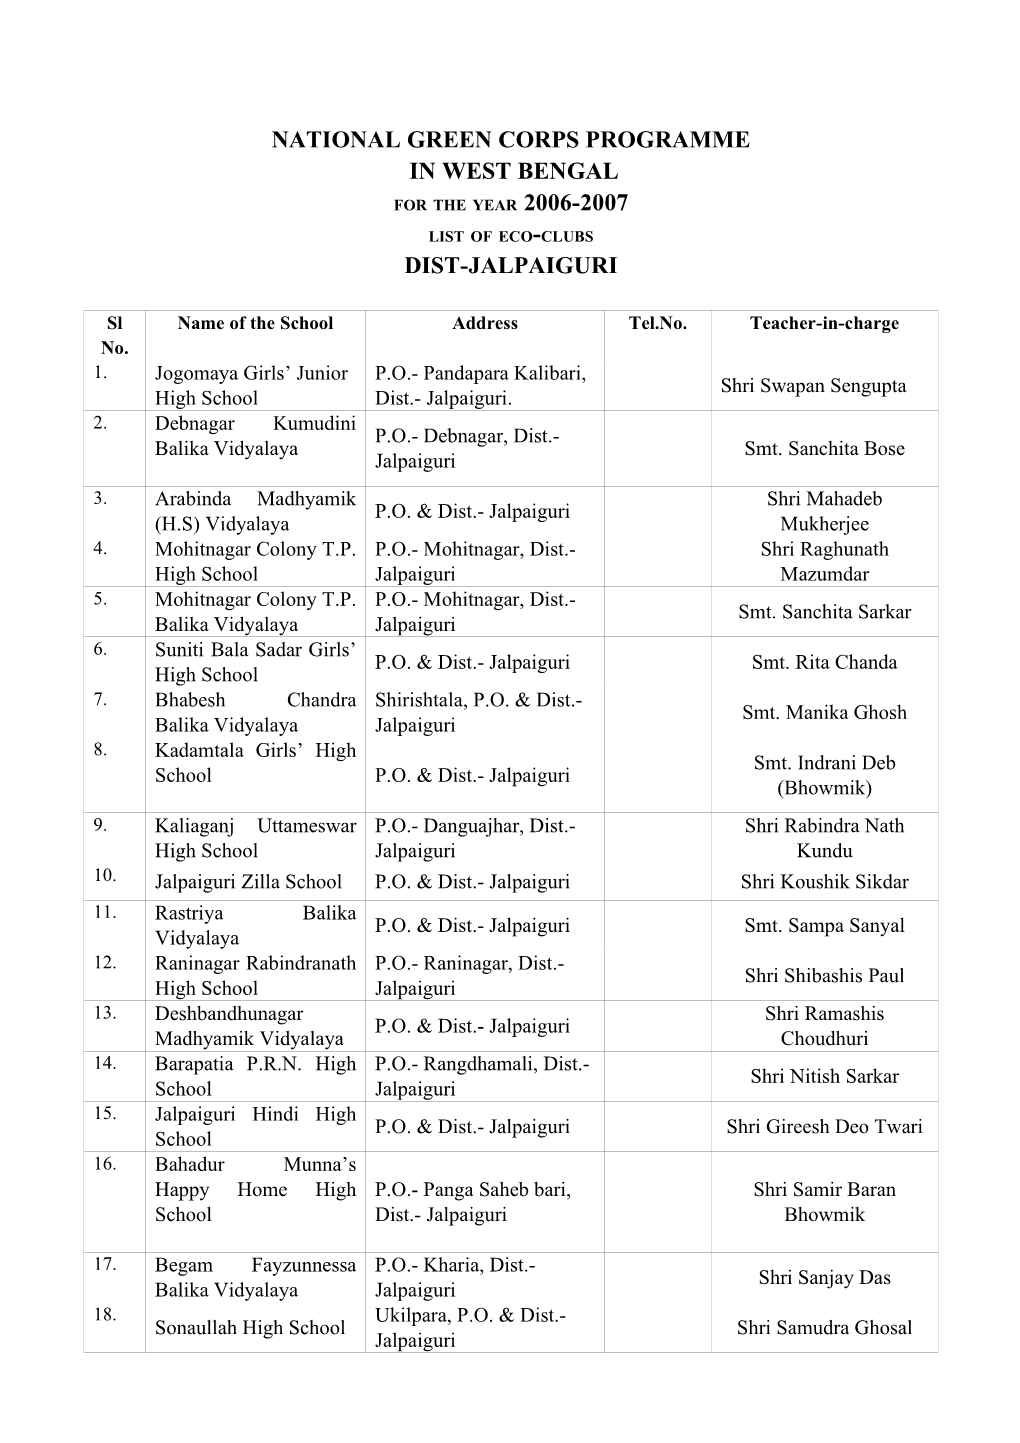 National Green Corps Programme in West Bengal 2006-2007 Dist-Jalpaiguri